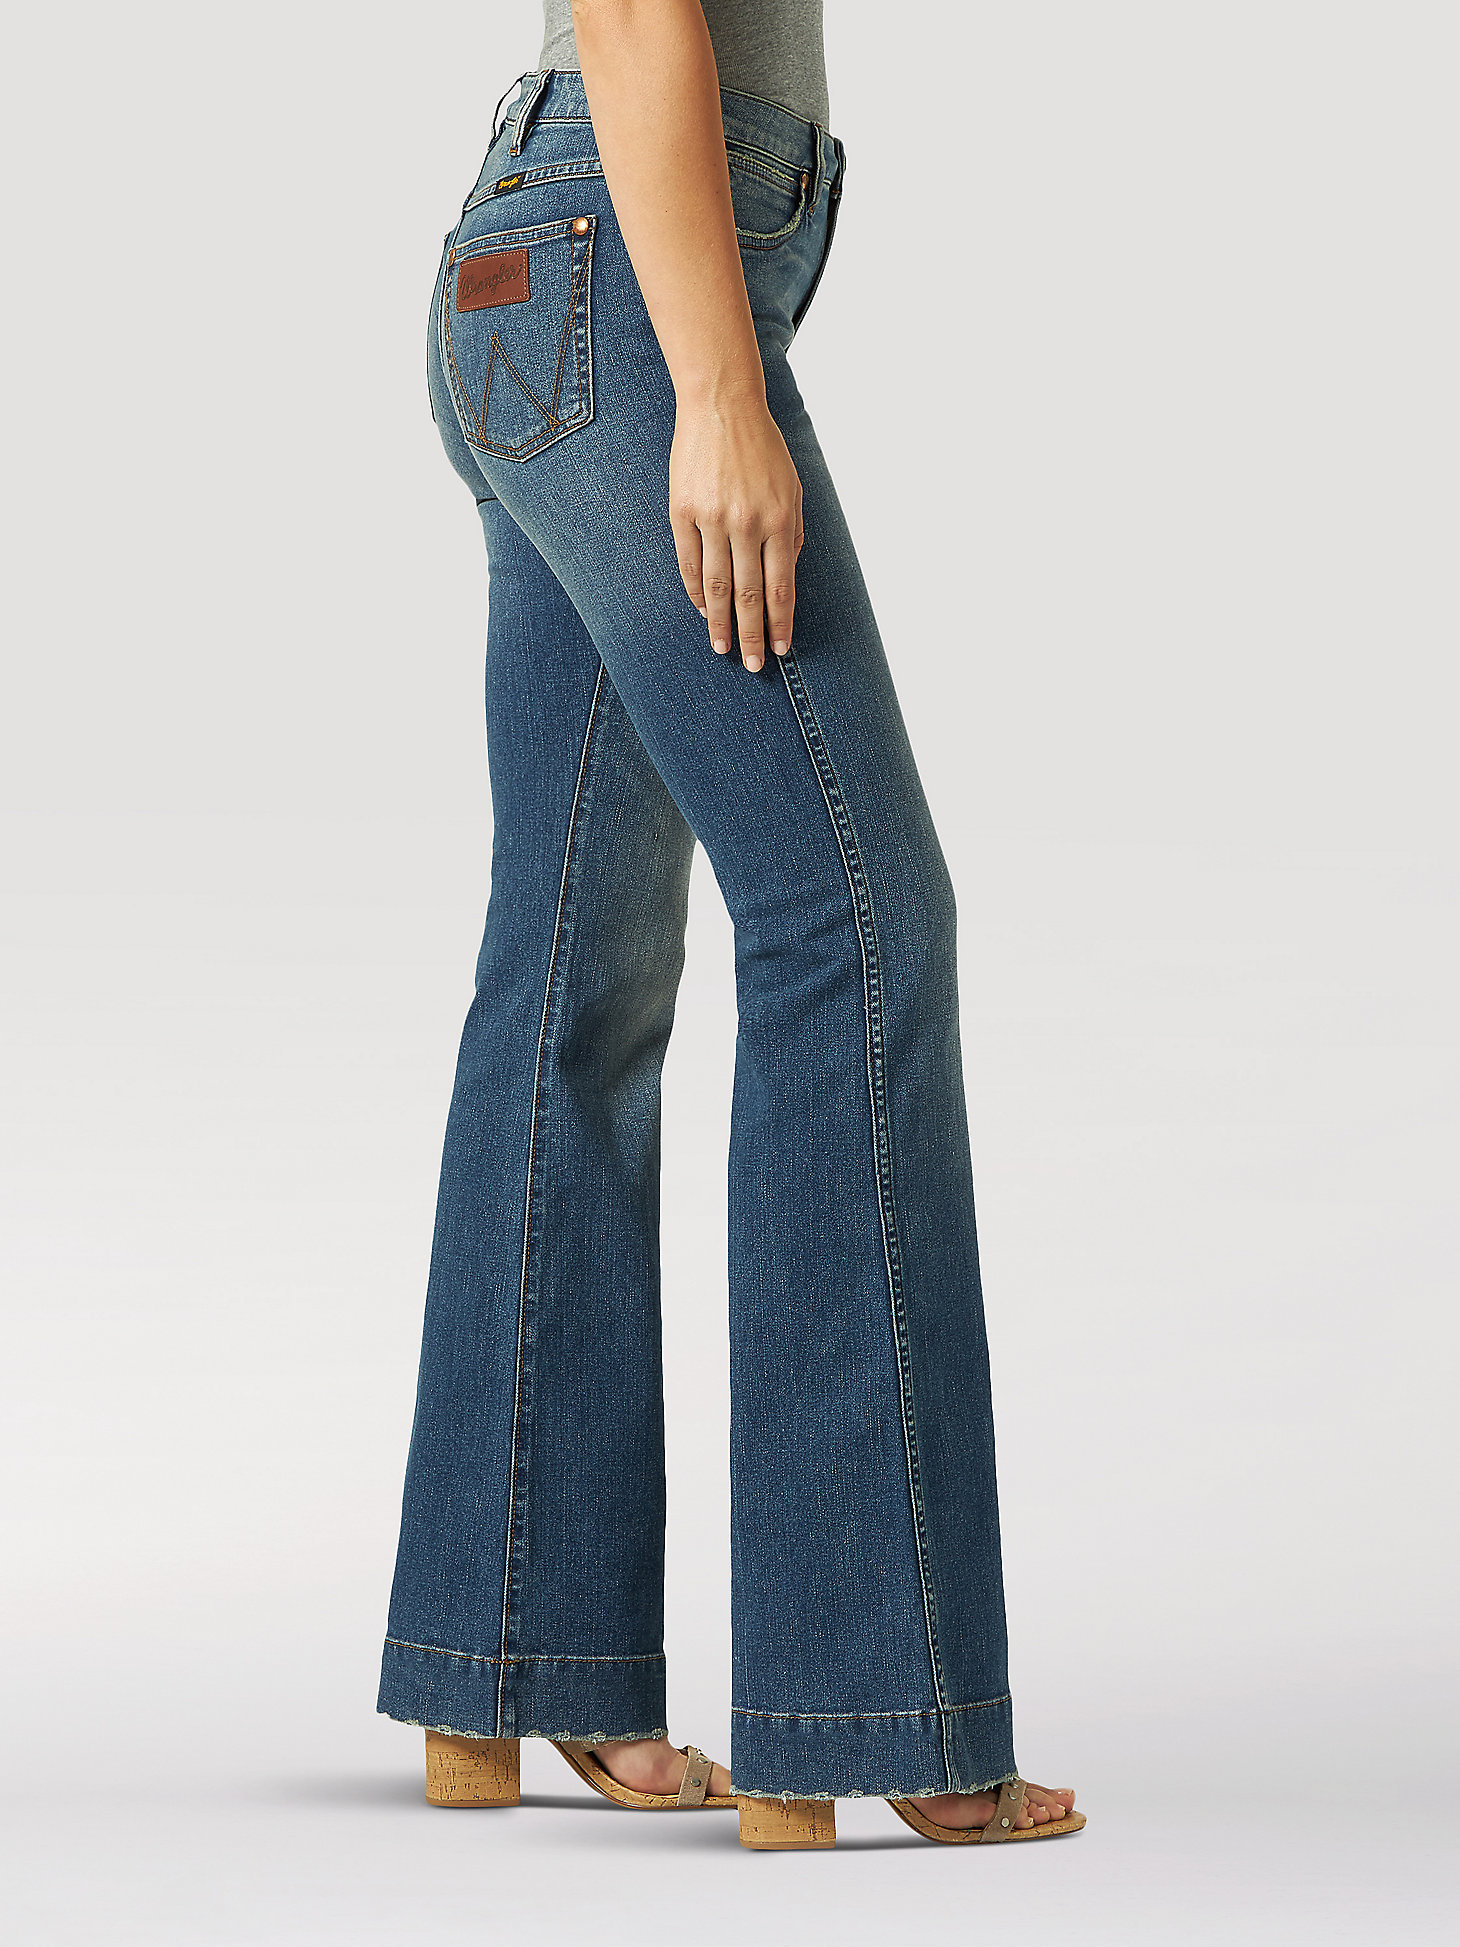 Women's Wrangler Retro® Bailey High Rise Trouser Jean in Shelby alternative view 5